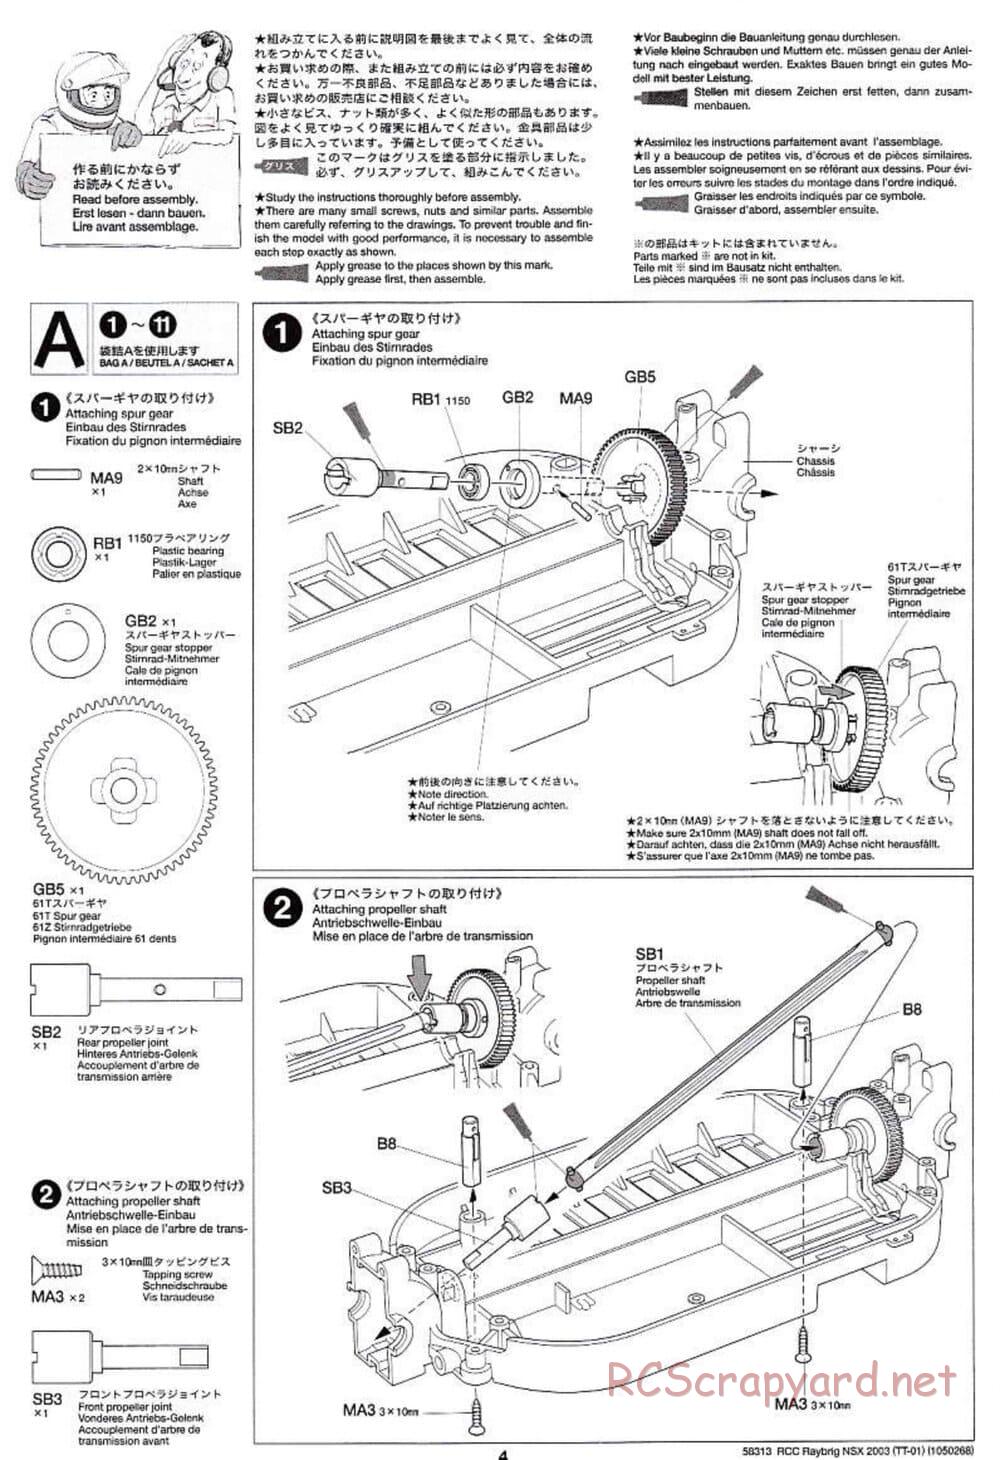 Tamiya - Raybrig NSX 2003 - TT-01 Chassis - Manual - Page 4